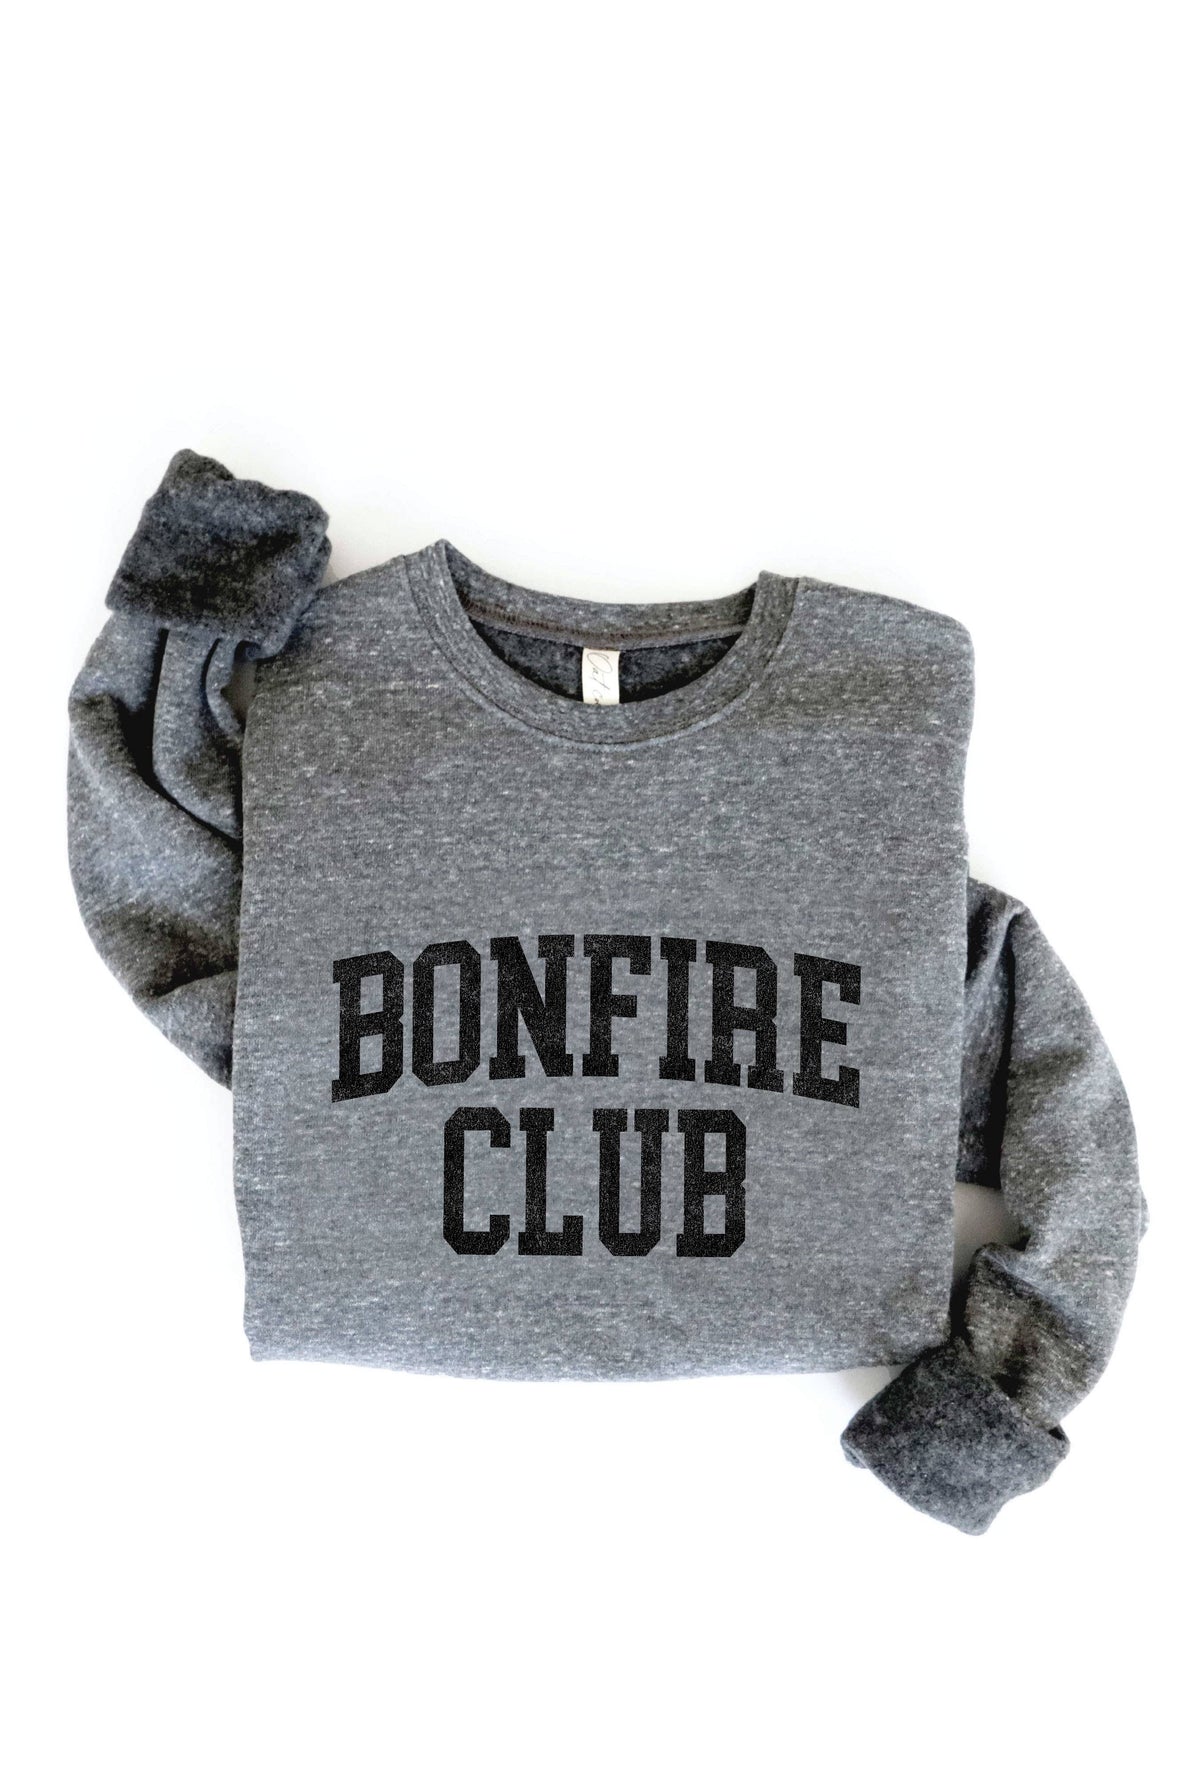 BONFIRE CLUB Graphic Sweatshirt: Dark Grey